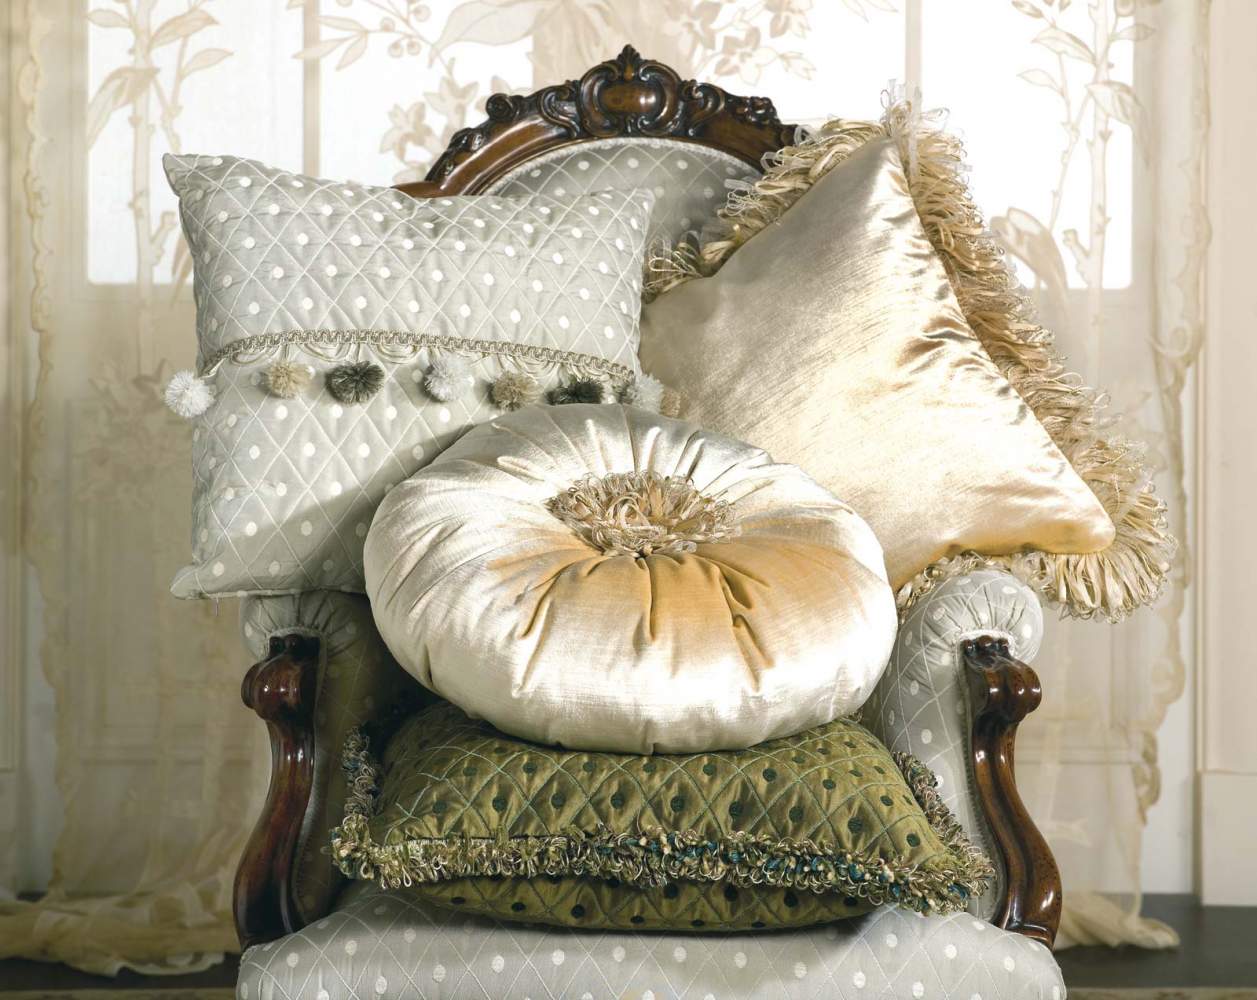 Classic Carlotta armchair and pillows